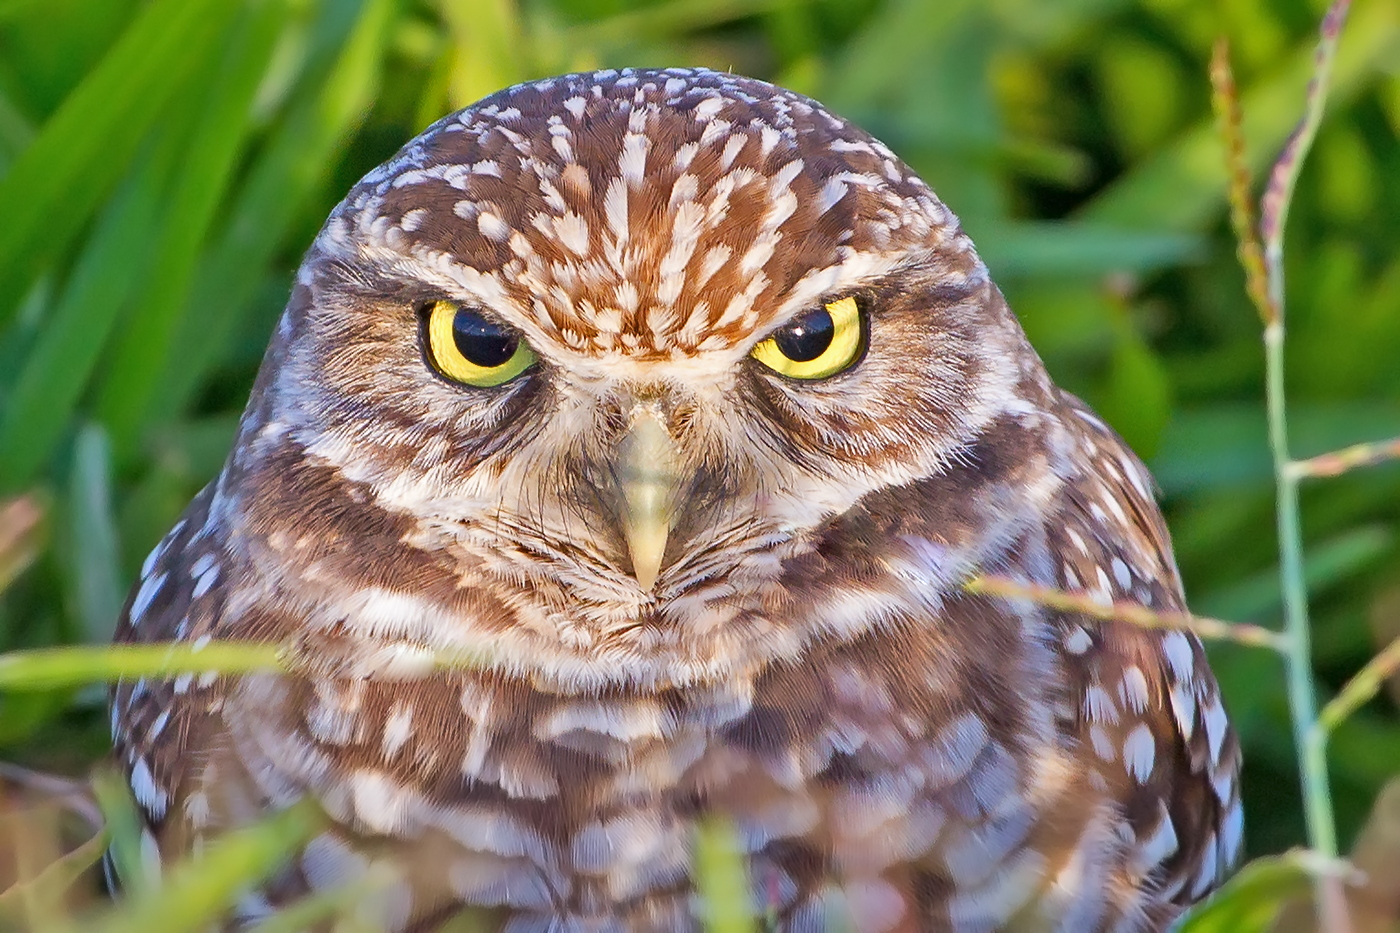 Burrowing Owl Eyes